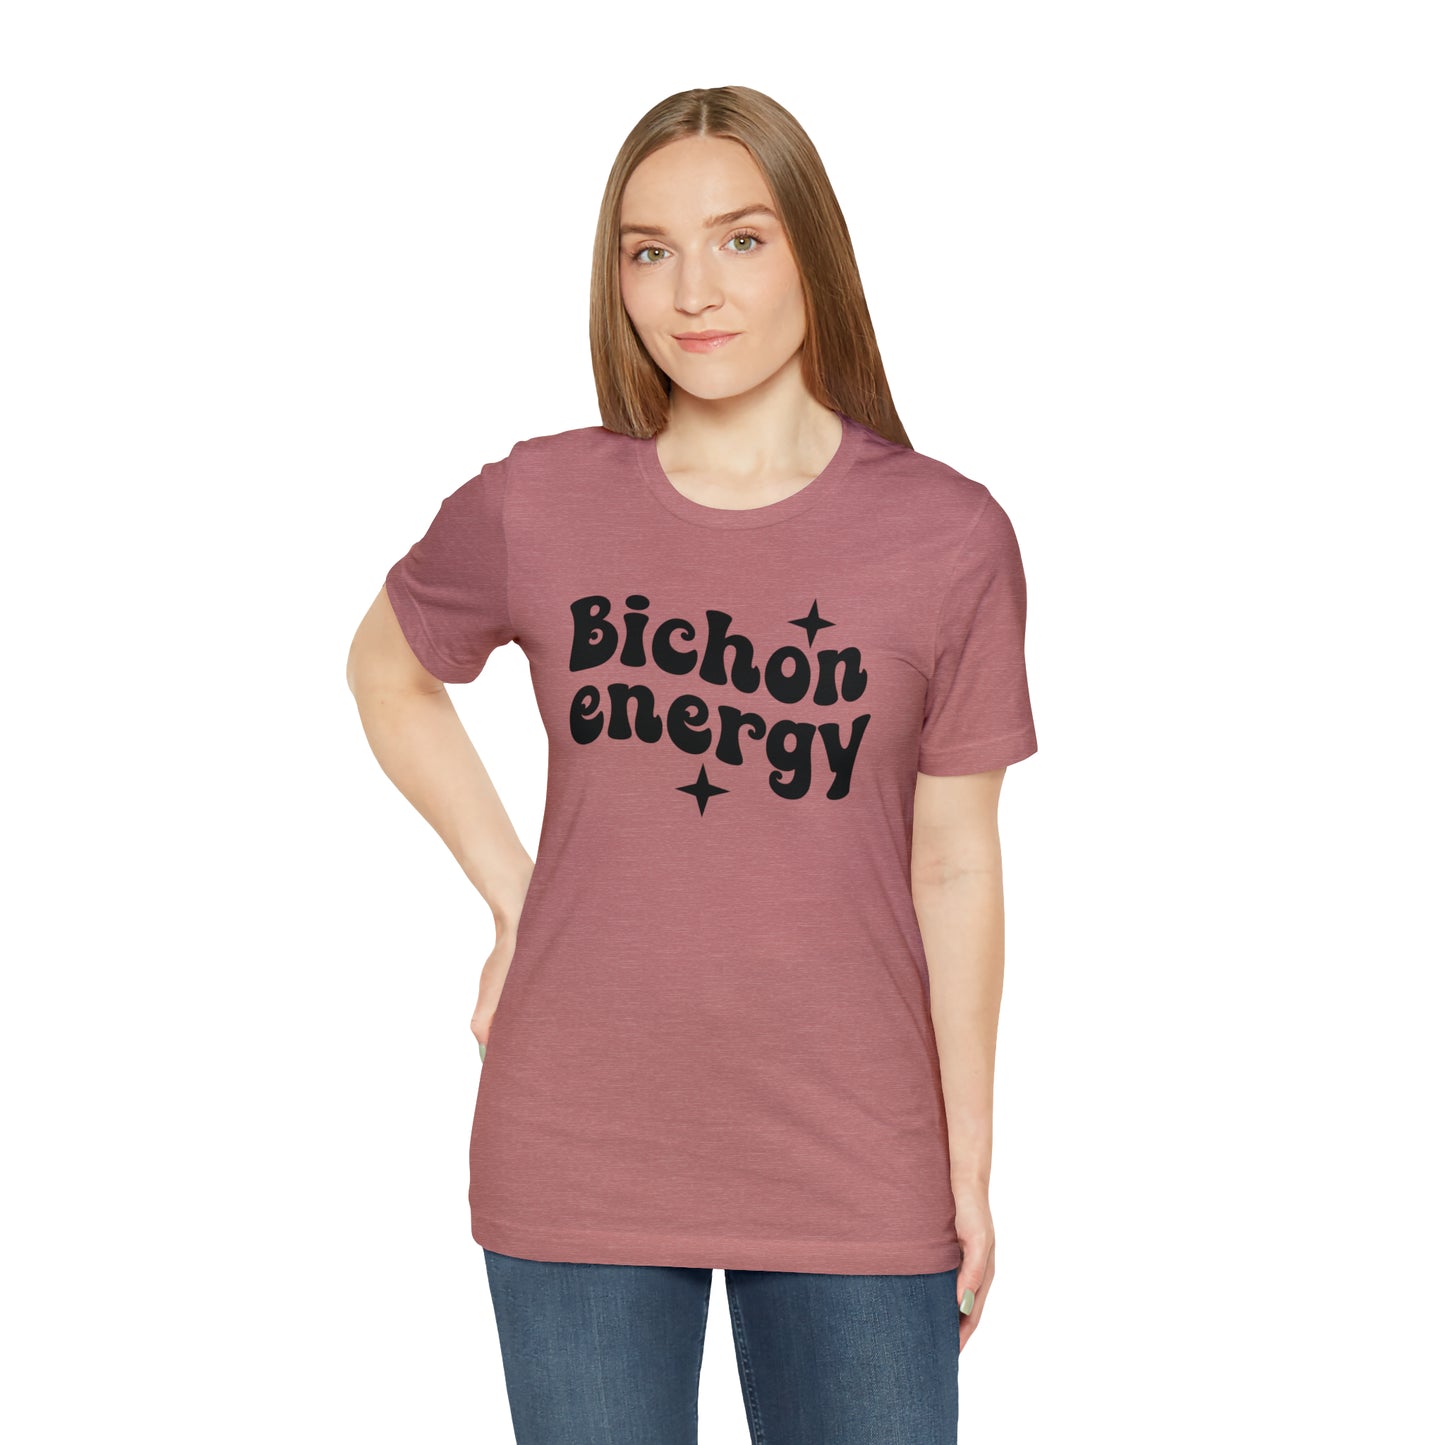 Bichon Energy Dog Short Sleeve T-shirt